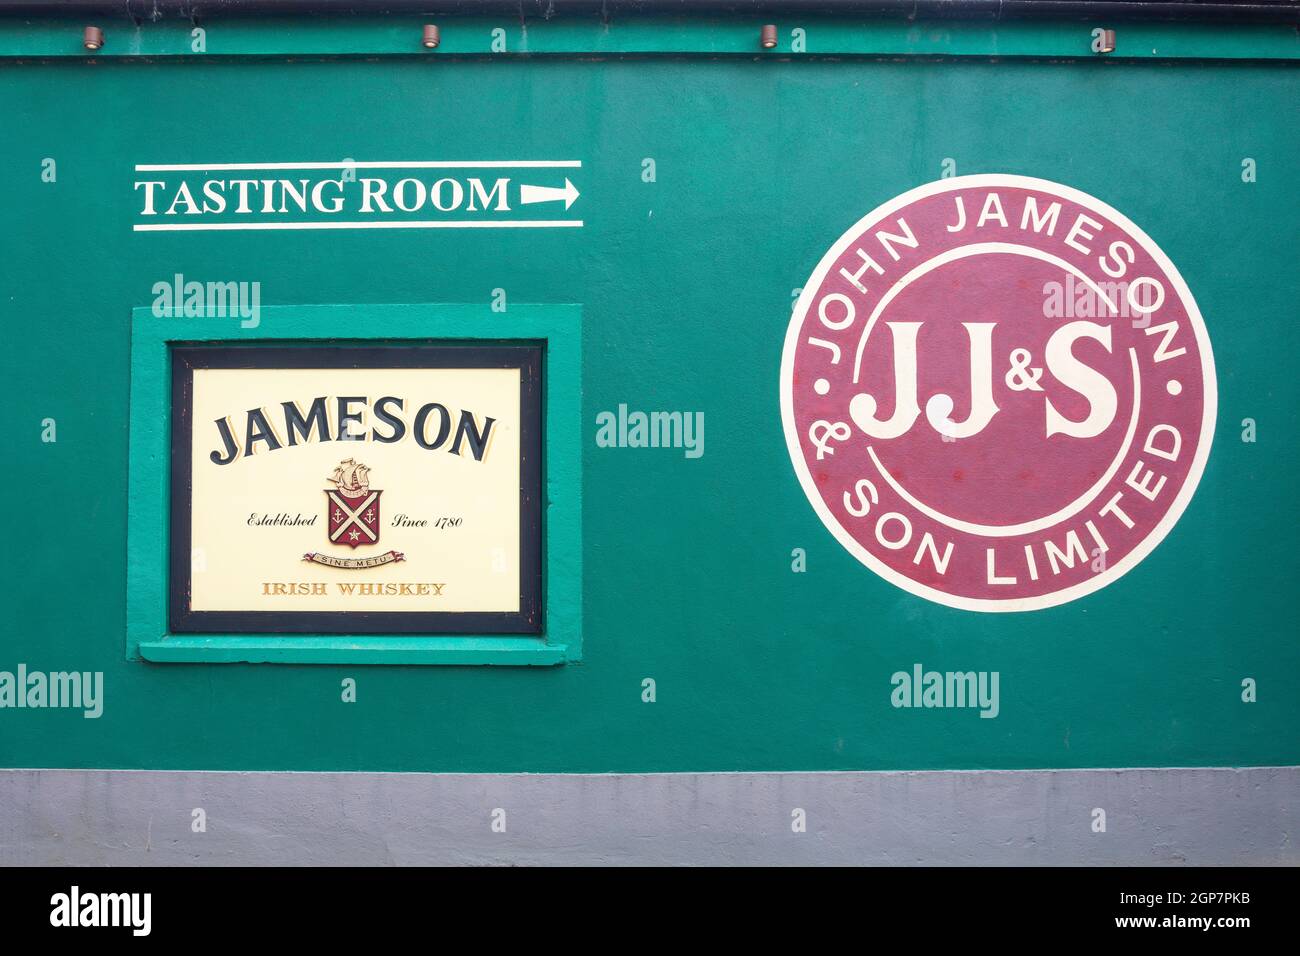 Sign to tasting room at Old Jameson Whiskey Distillery Midleton, Distillery Walk, Midleton (Mainistir na Corann), County Cork, Republic of Ireland Stock Photo